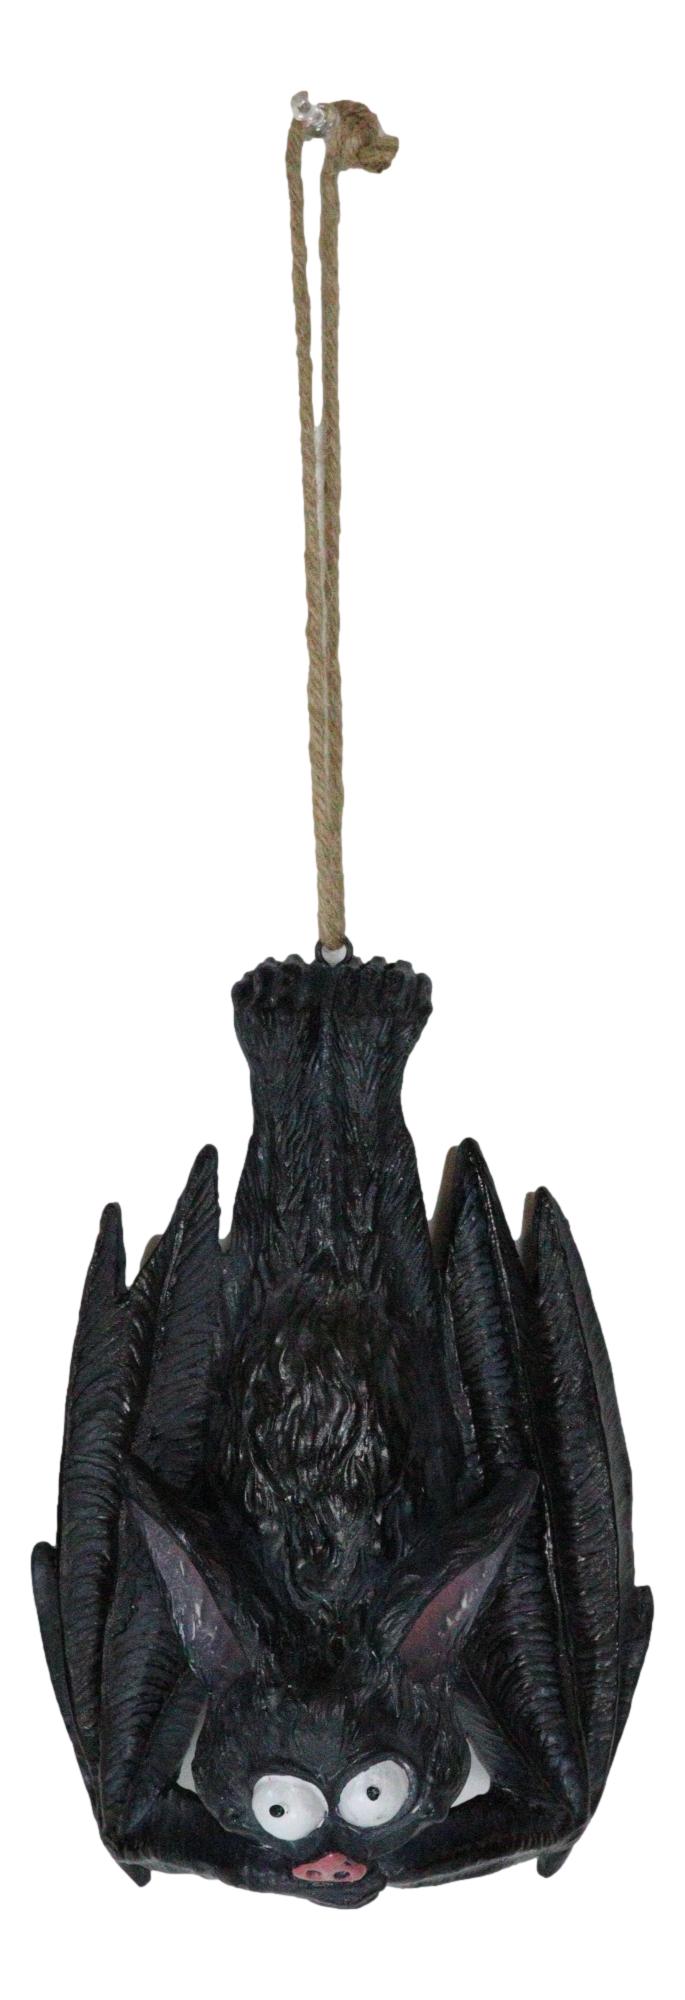 Gothic Vampire See Hear Speak No Evil Comical Bats Hanging Ornament Set of 3